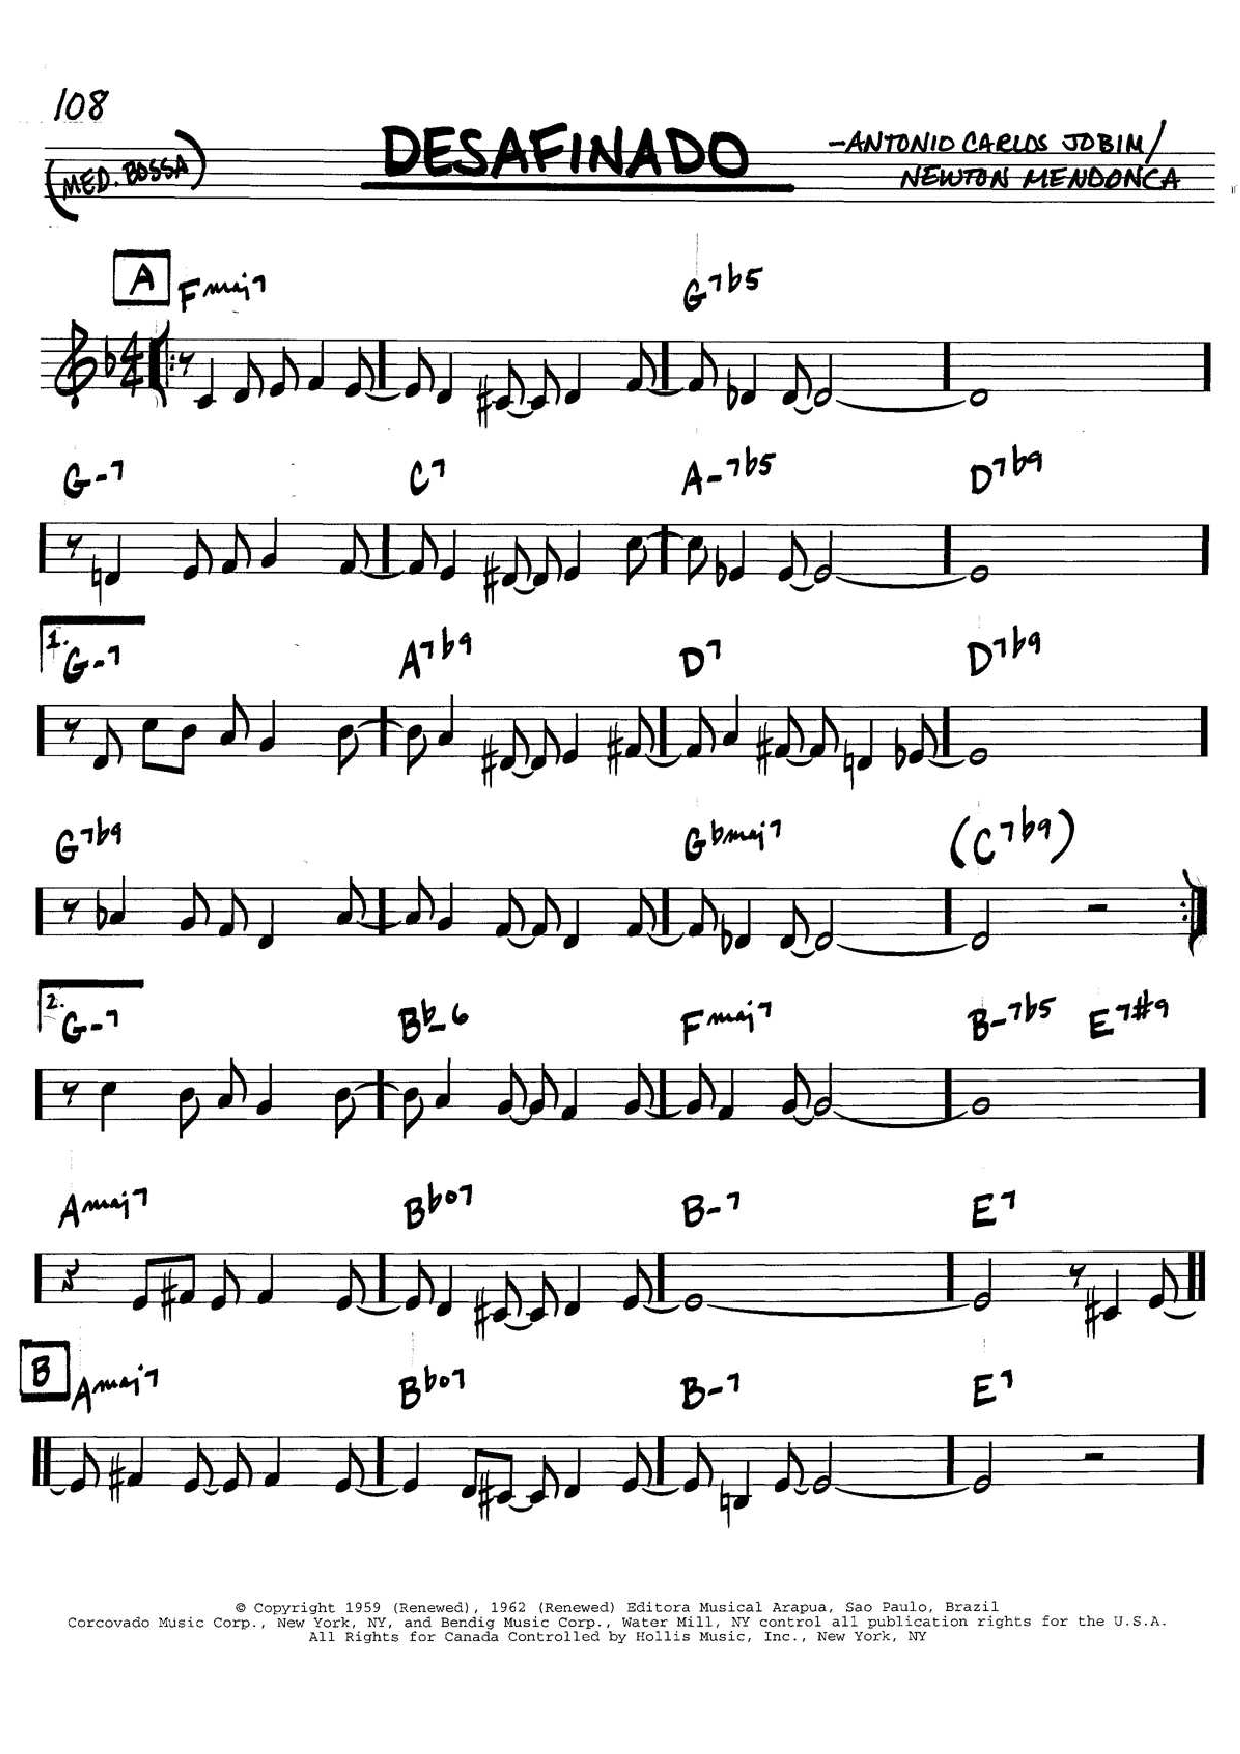 Antonio Carlos Jobim Desafinado Sheet Music Notes & Chords for Real Book - Melody & Chords - Eb Instruments - Download or Print PDF